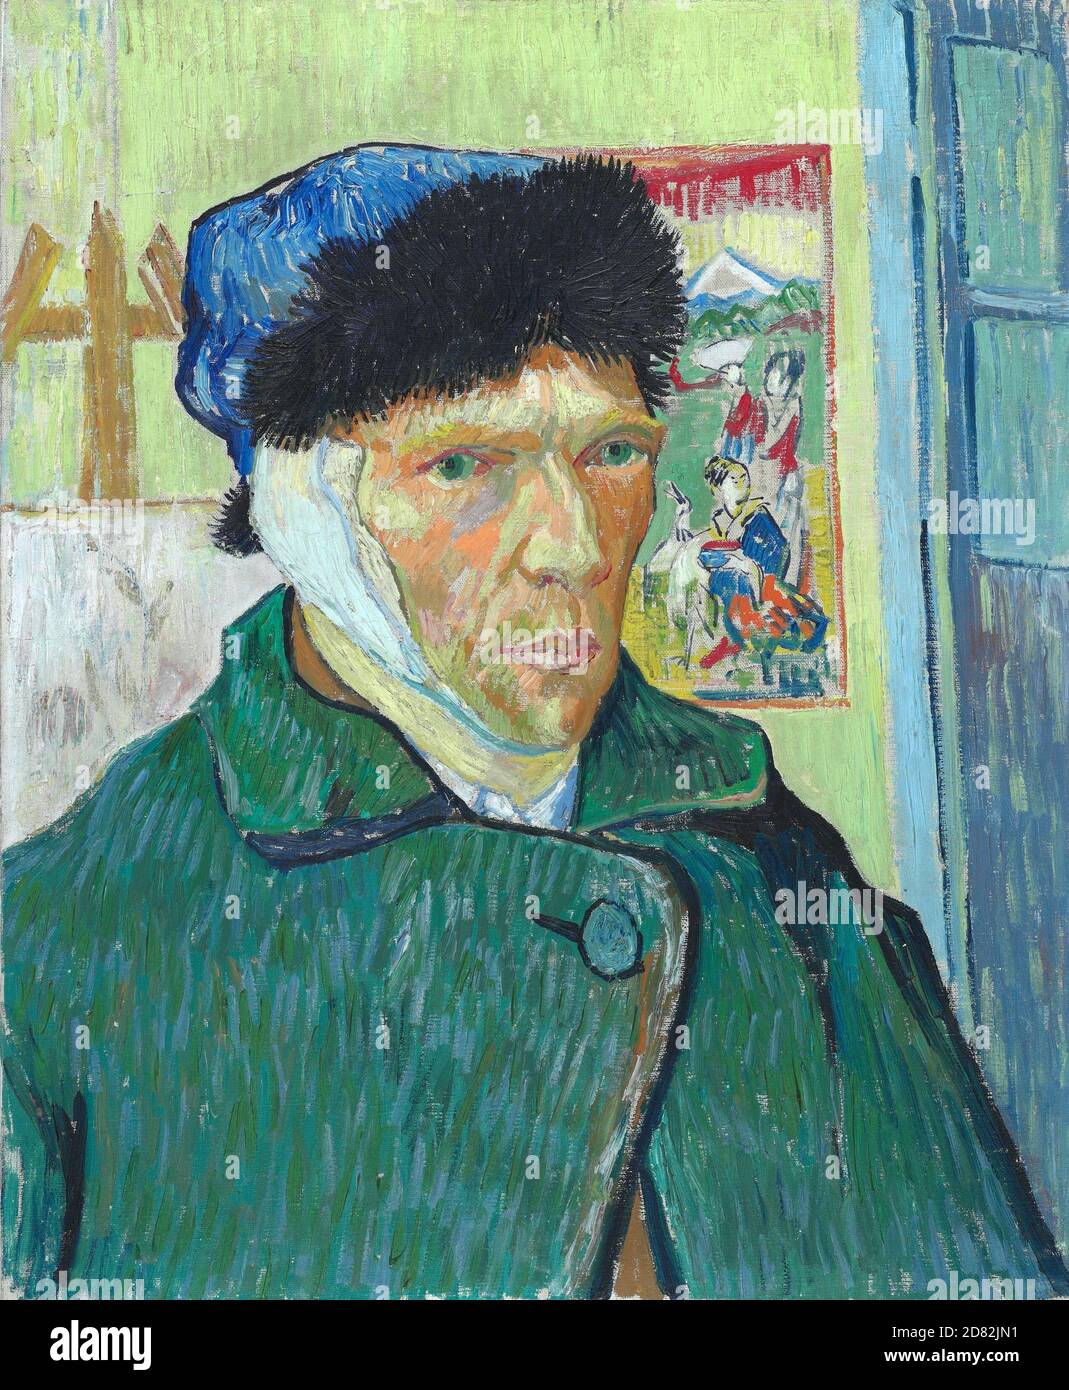 Titel: Selbstporträt mit verbundenem Ohr Ersteller: Vincent van Gogh Datum: 1889 Medium: Öl auf Leinwand Maße: 60.5 x 50 cm Ort: The Courtauld, UK Stockfoto